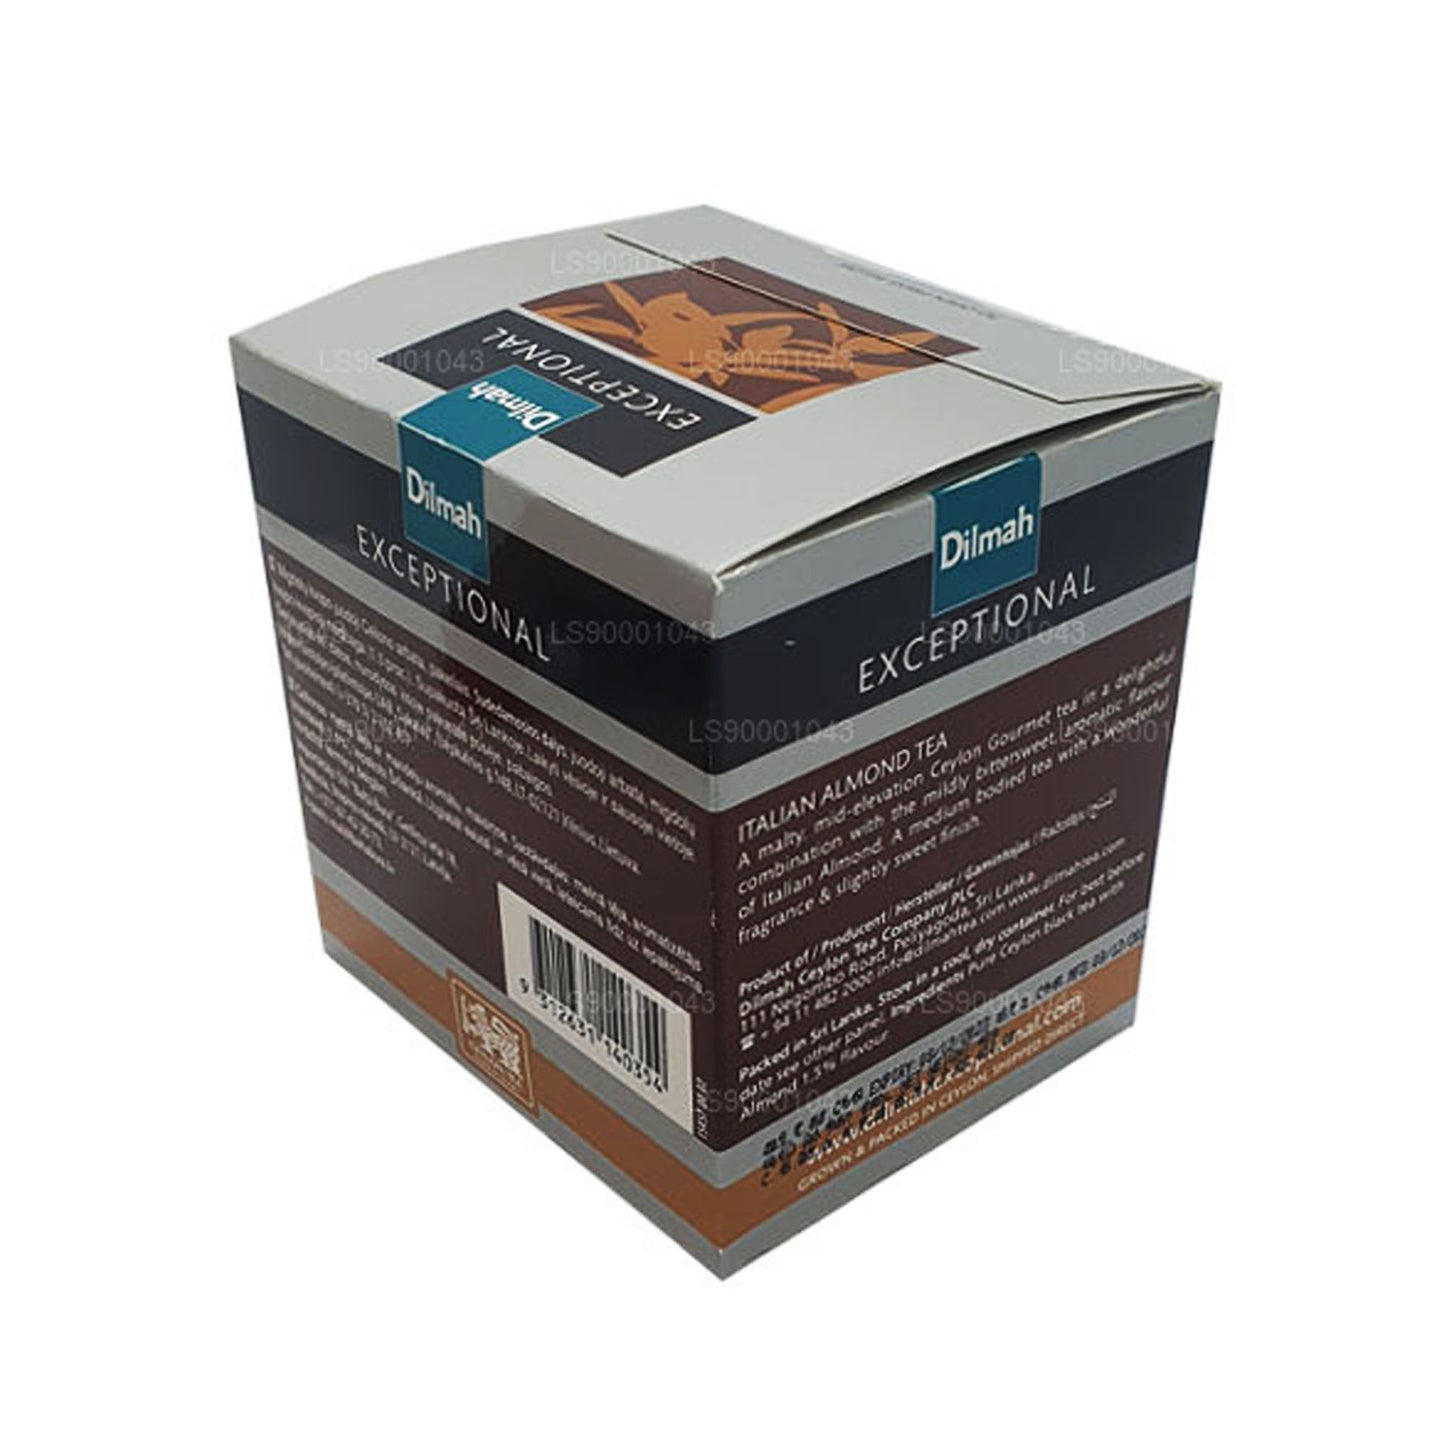 Dilmah Exceptional Italian Almond Real Leaf Tea (40g) 20 Tea Bags